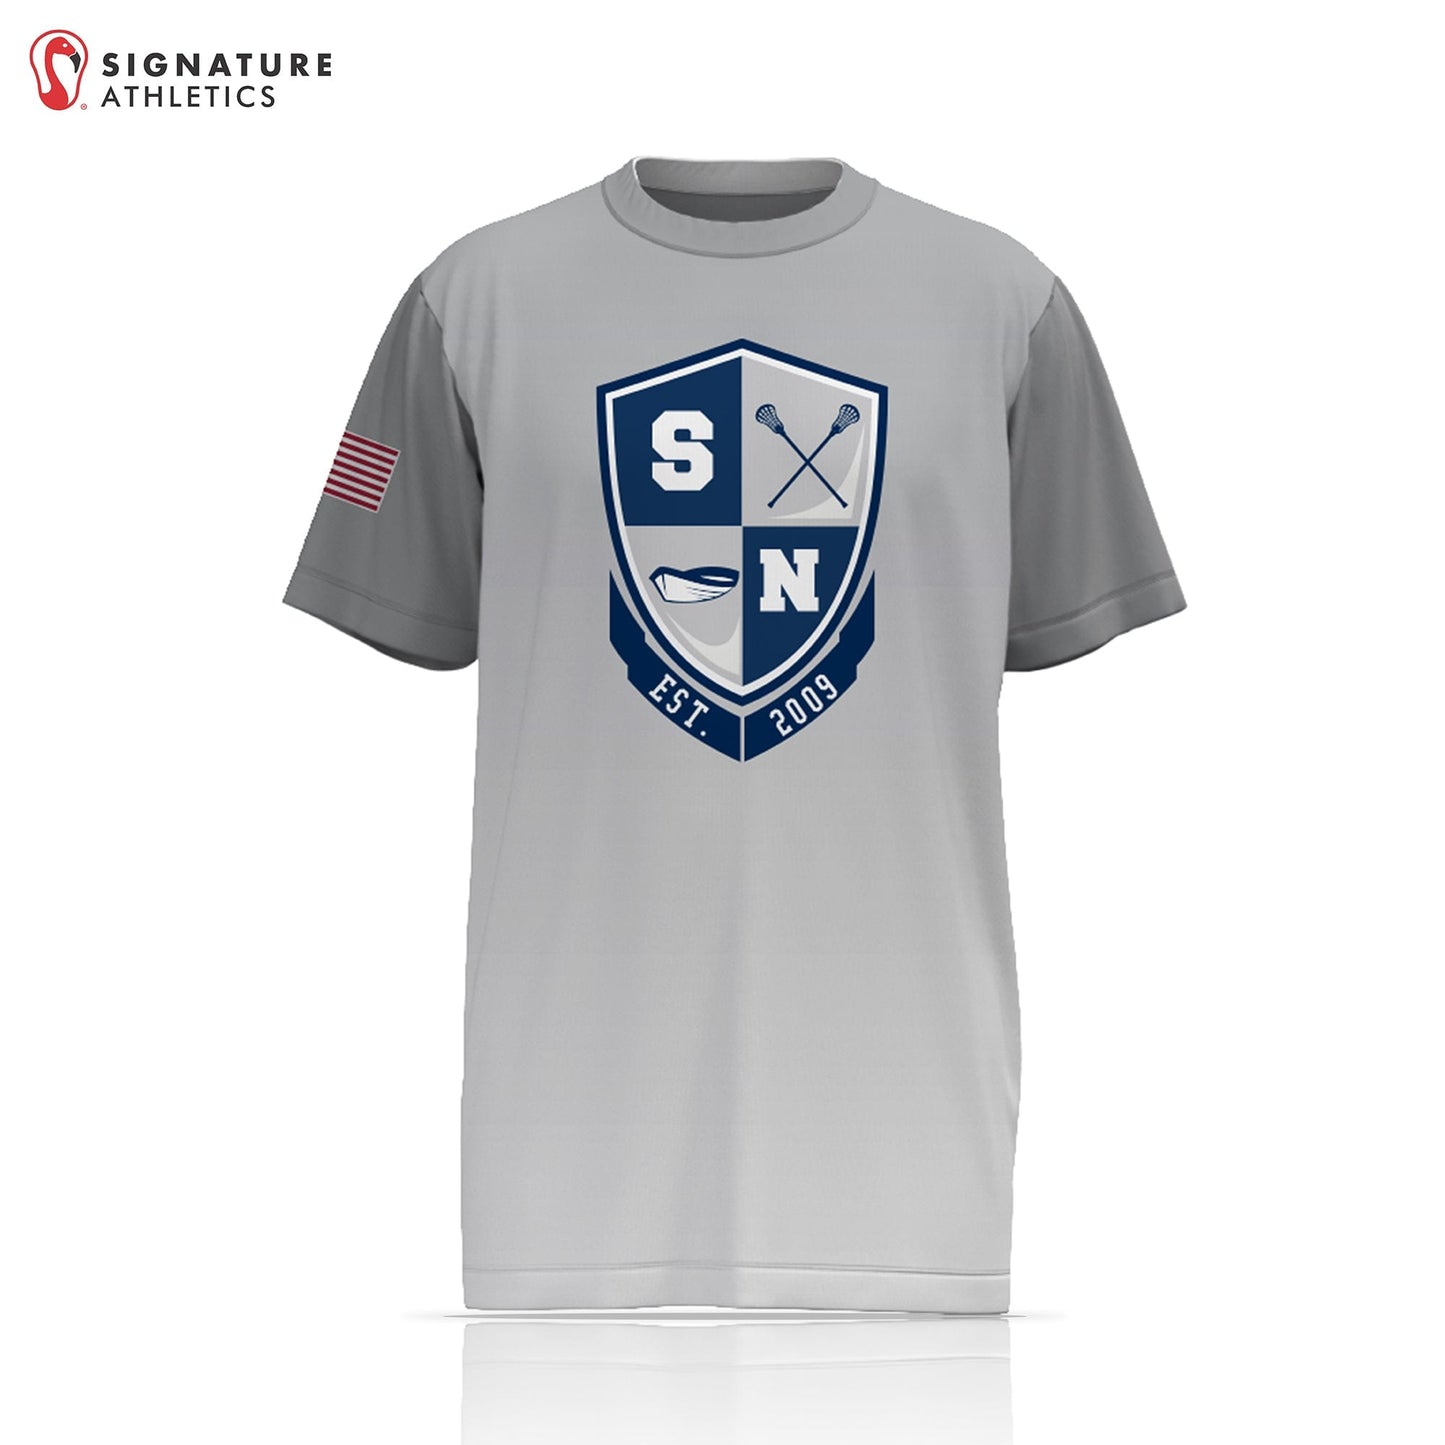 SNYL Team Swag Store Women's Performance Short Sleeve Shooter Shirt (Sold Seperately):Girls U15 Signature Lacrosse